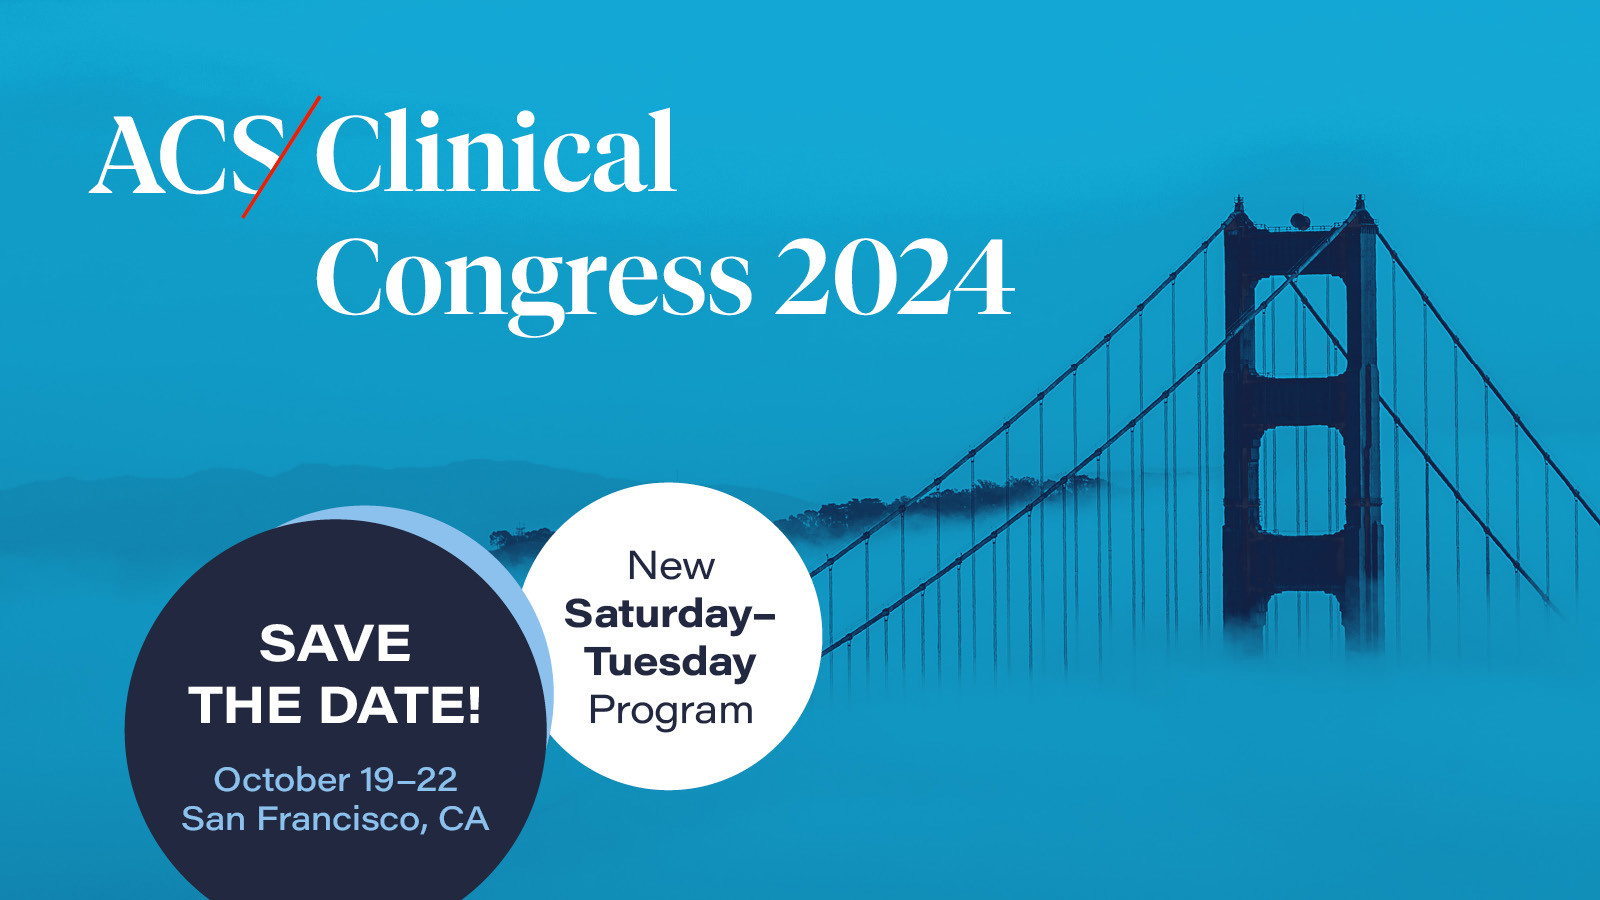 Mark Your Calendar with Key Dates for Clinical Congress 2024 ACS